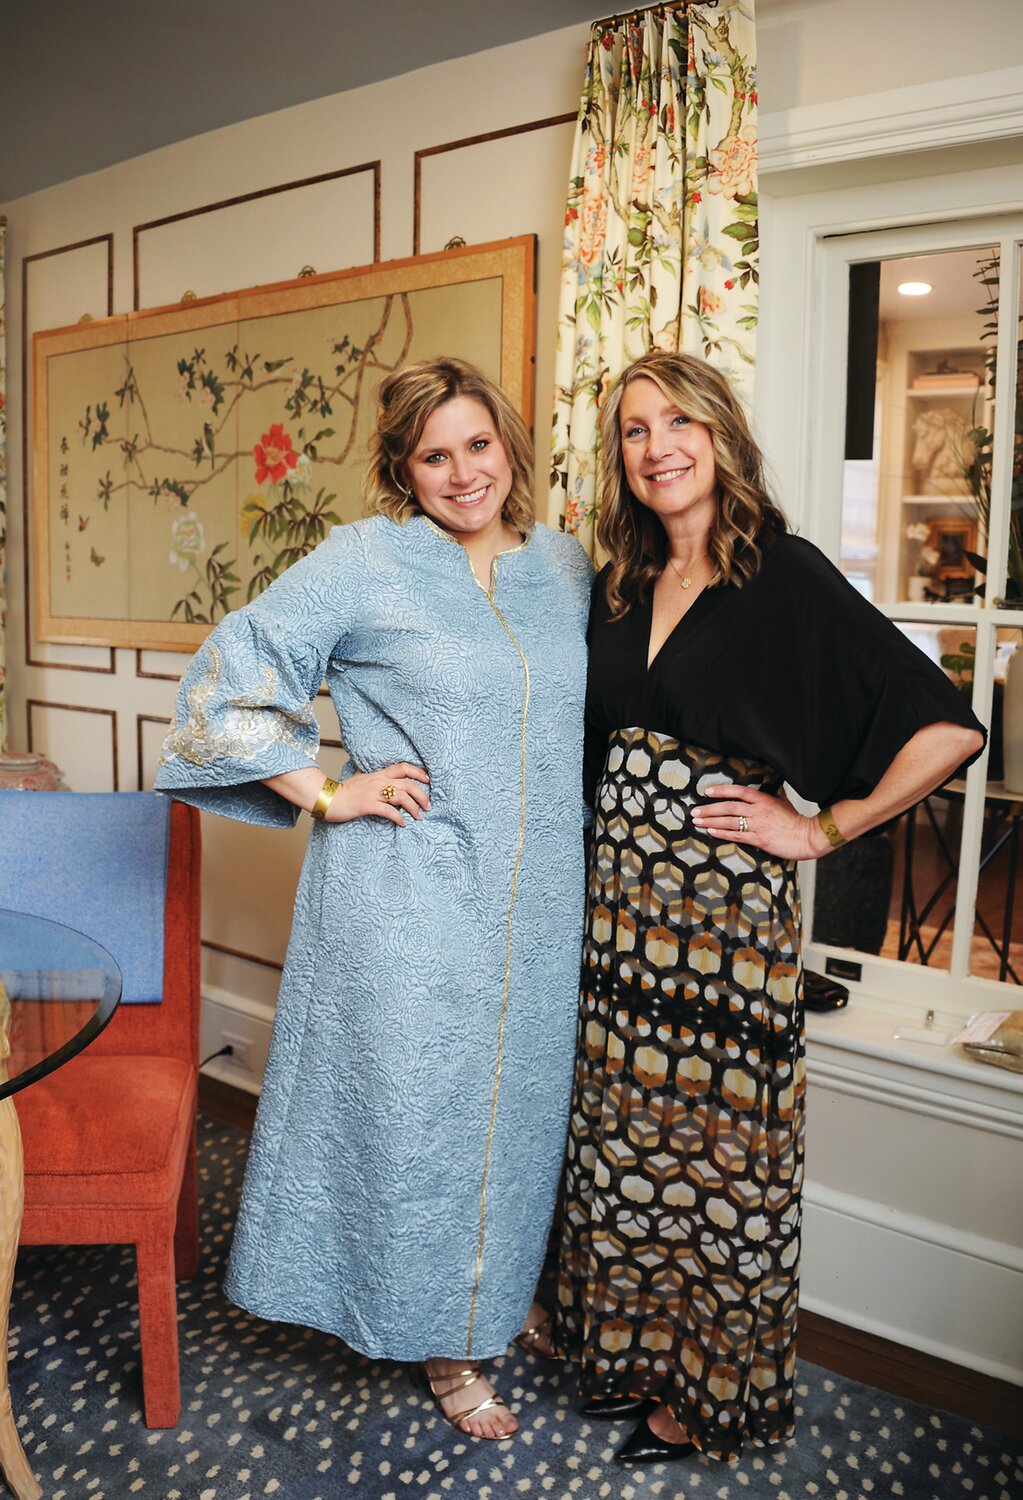 Home Tonic designers Rebecca Nolan and Heidi Gordon designed Blossom Hall.